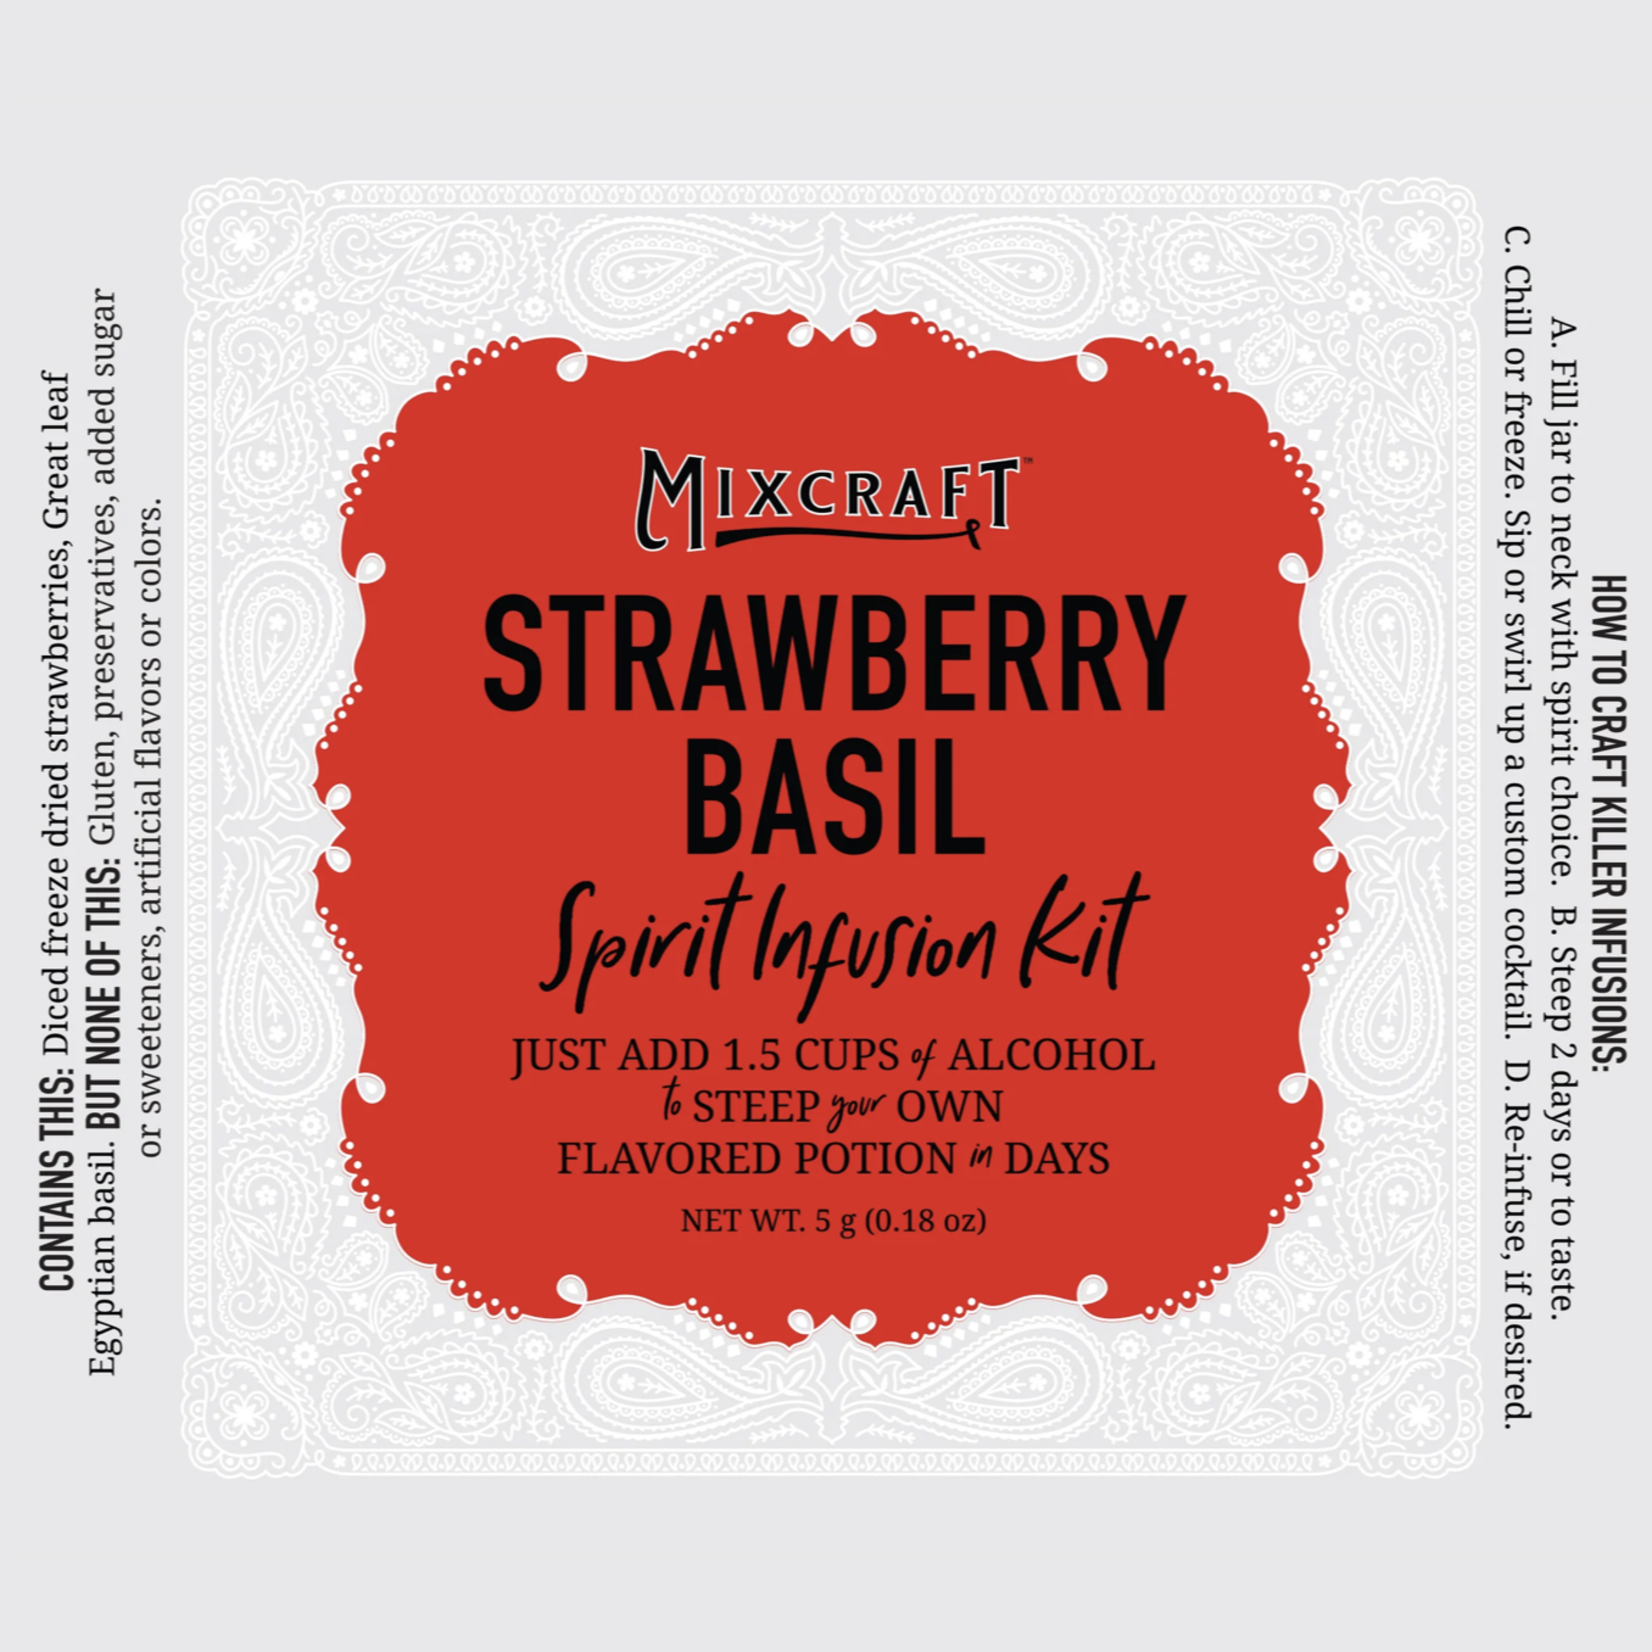 MixCraft Strawberry Basil Spirit Infusion Kit